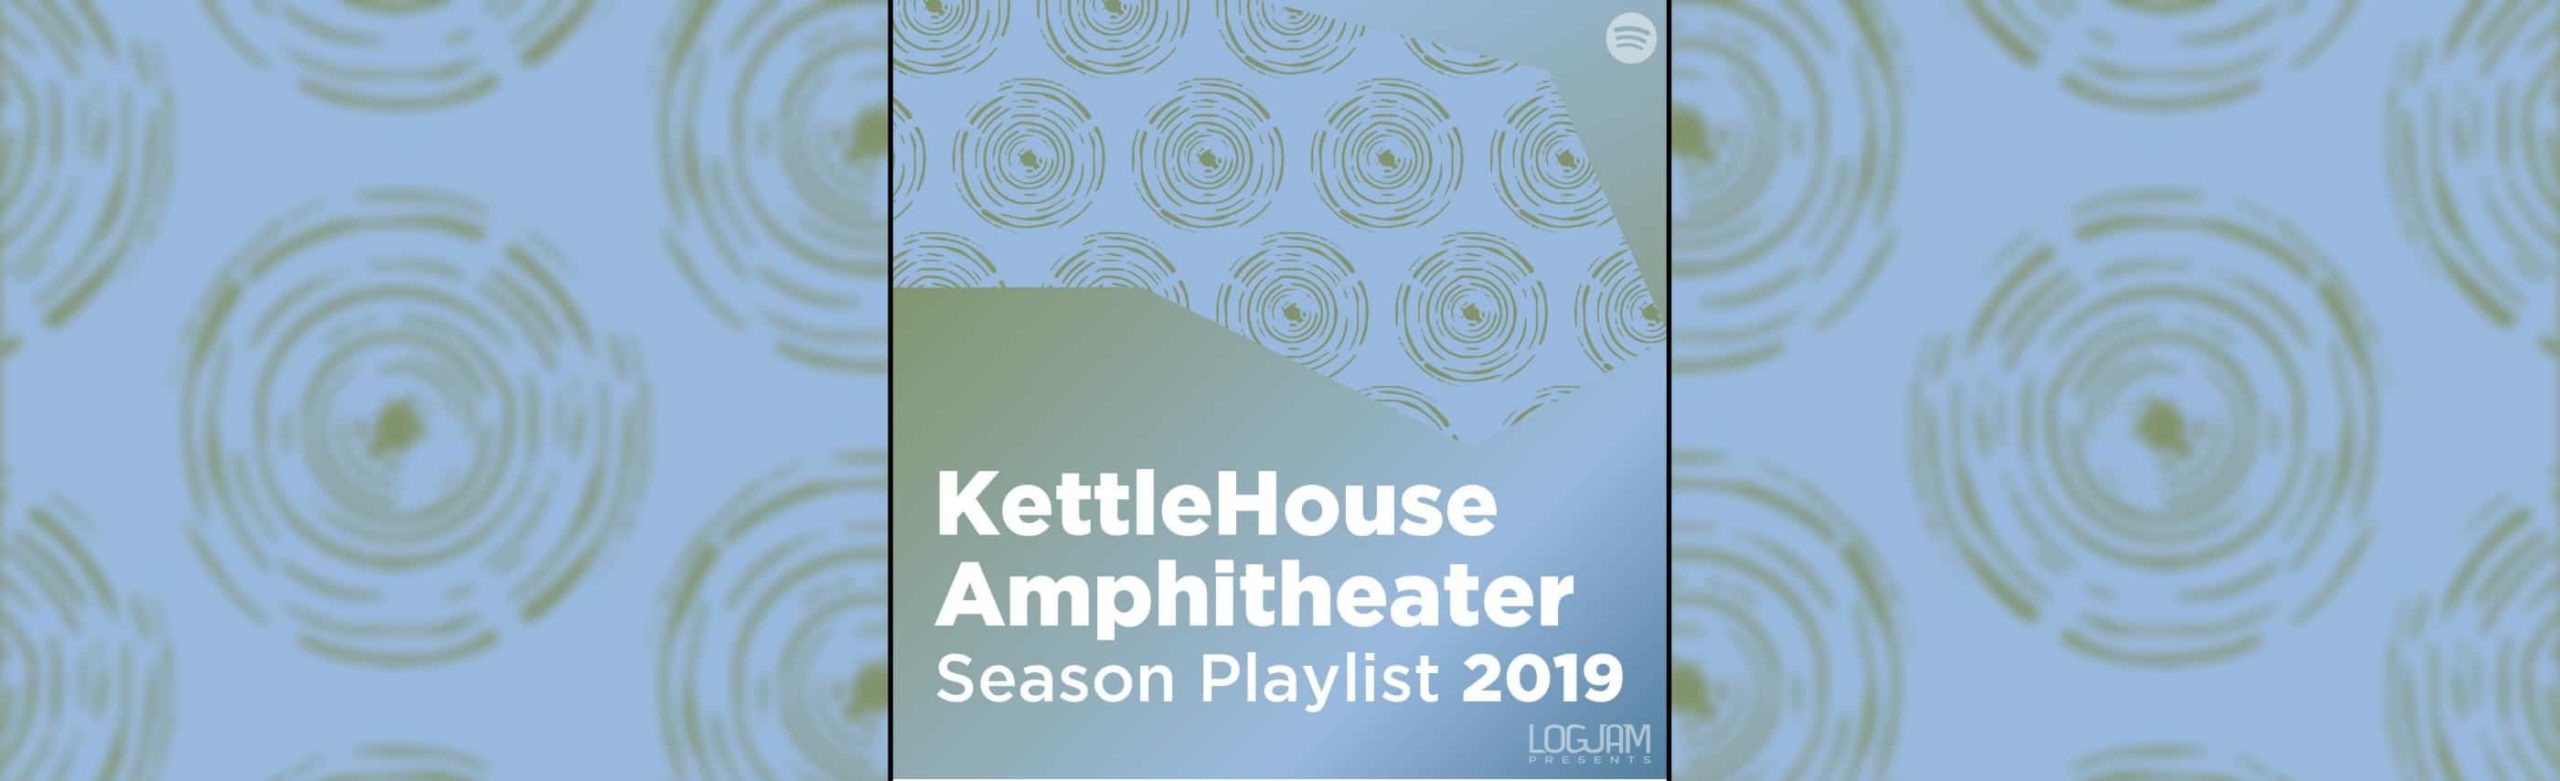 Logjam Radio: KettleHouse Amphitheater Season Playlist 2019 Image